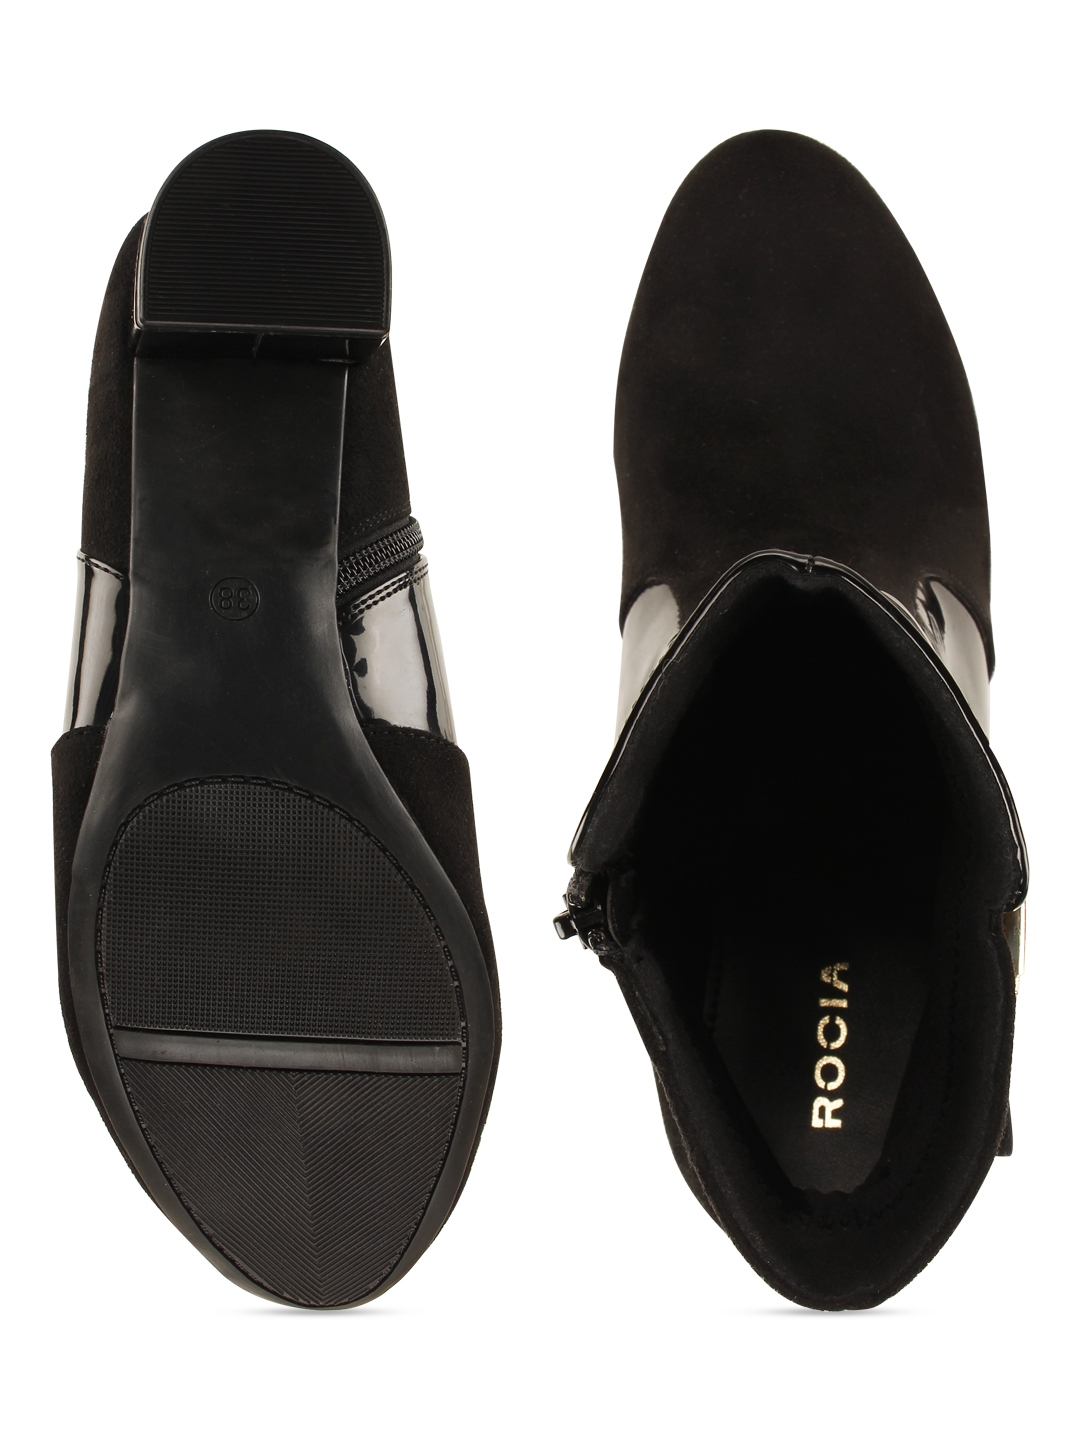 Rocia | Rocia Black Women Ankle Length Boots 5